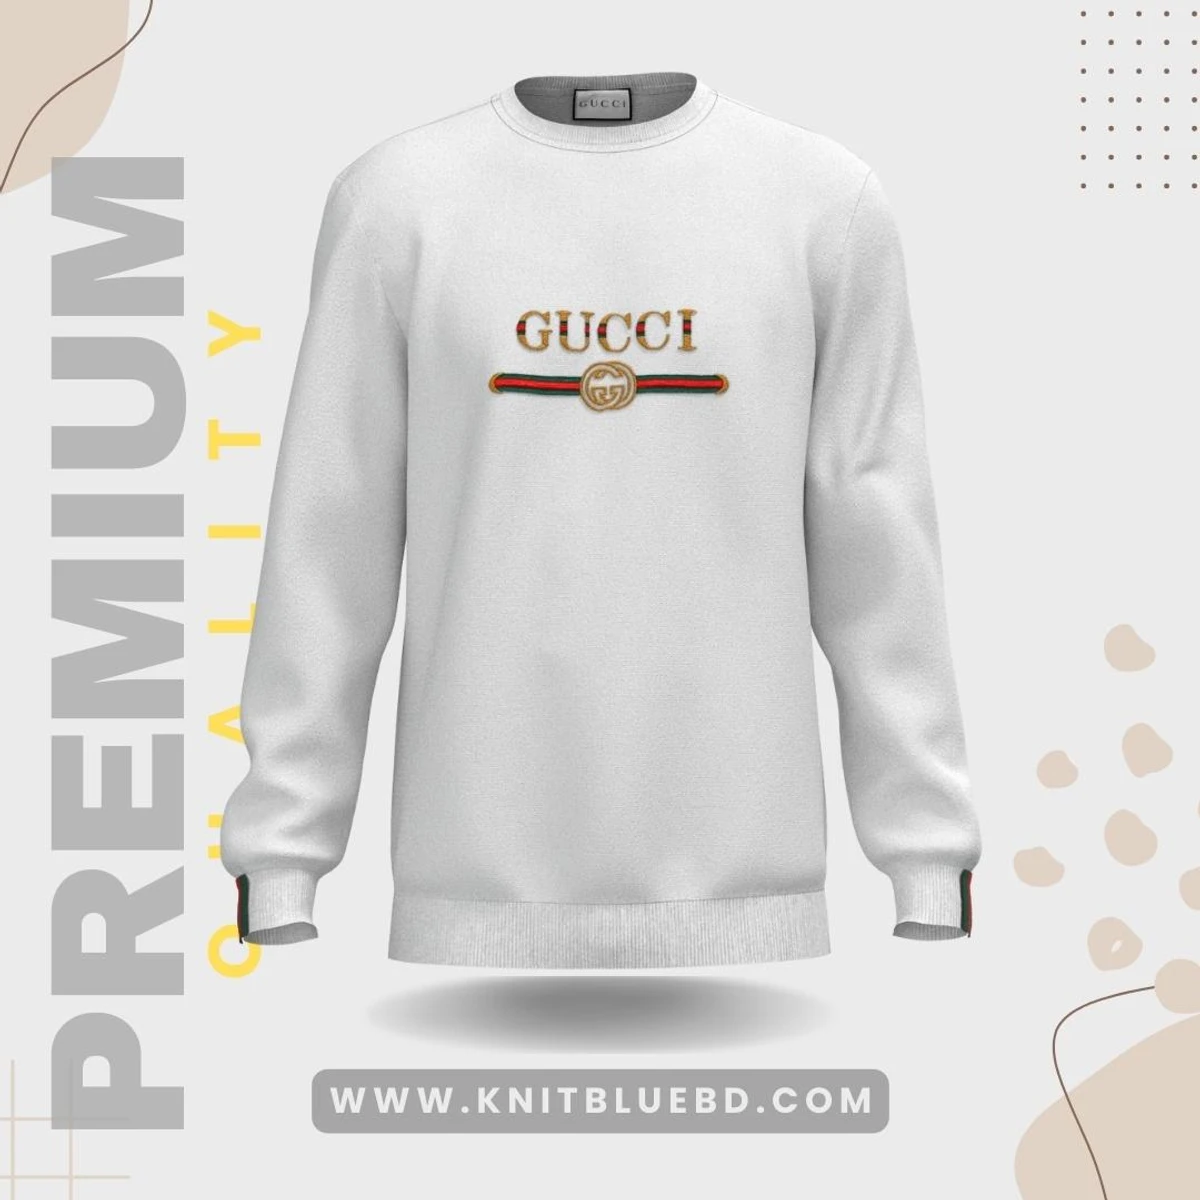 Premium quality winter sweatshirt for men